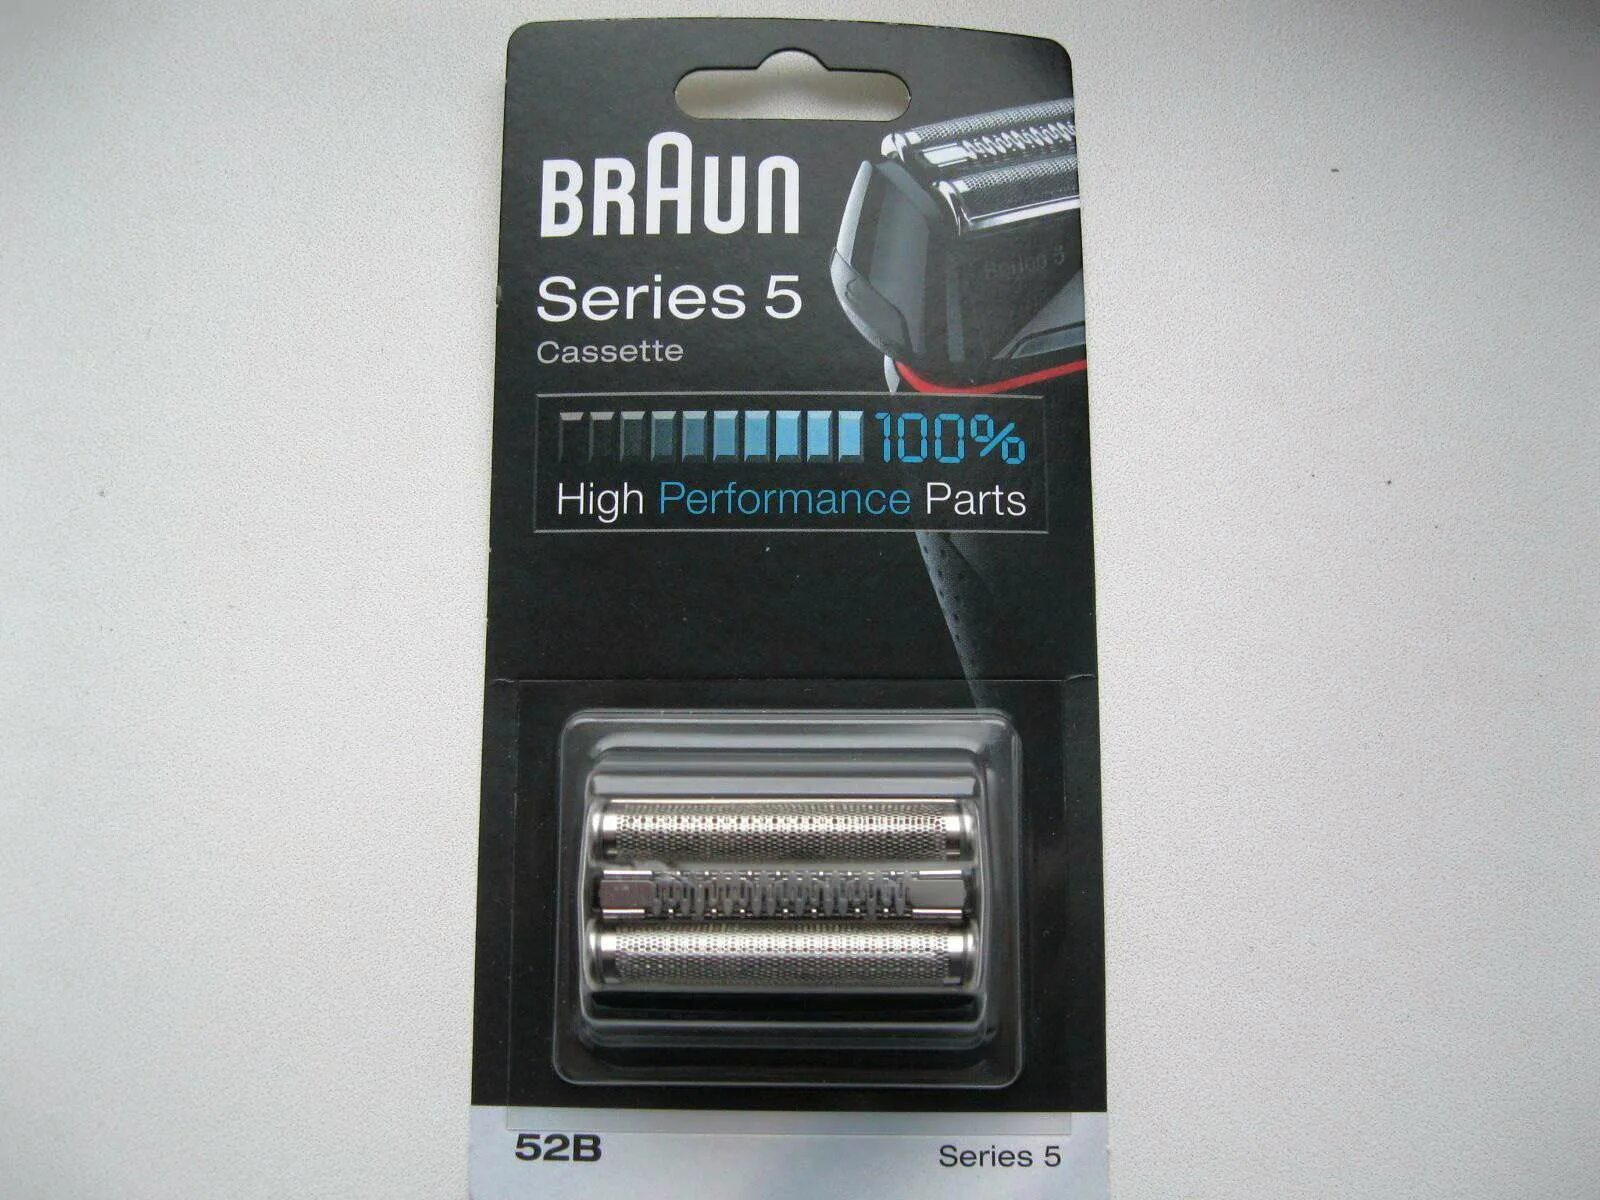 Сетка braun series 5. Сетка и режущий блок Braun 52b. Сетка Браун 52 b. Режущий блок Braun Series 5 52b. Браун 52b сетка для бритвы.